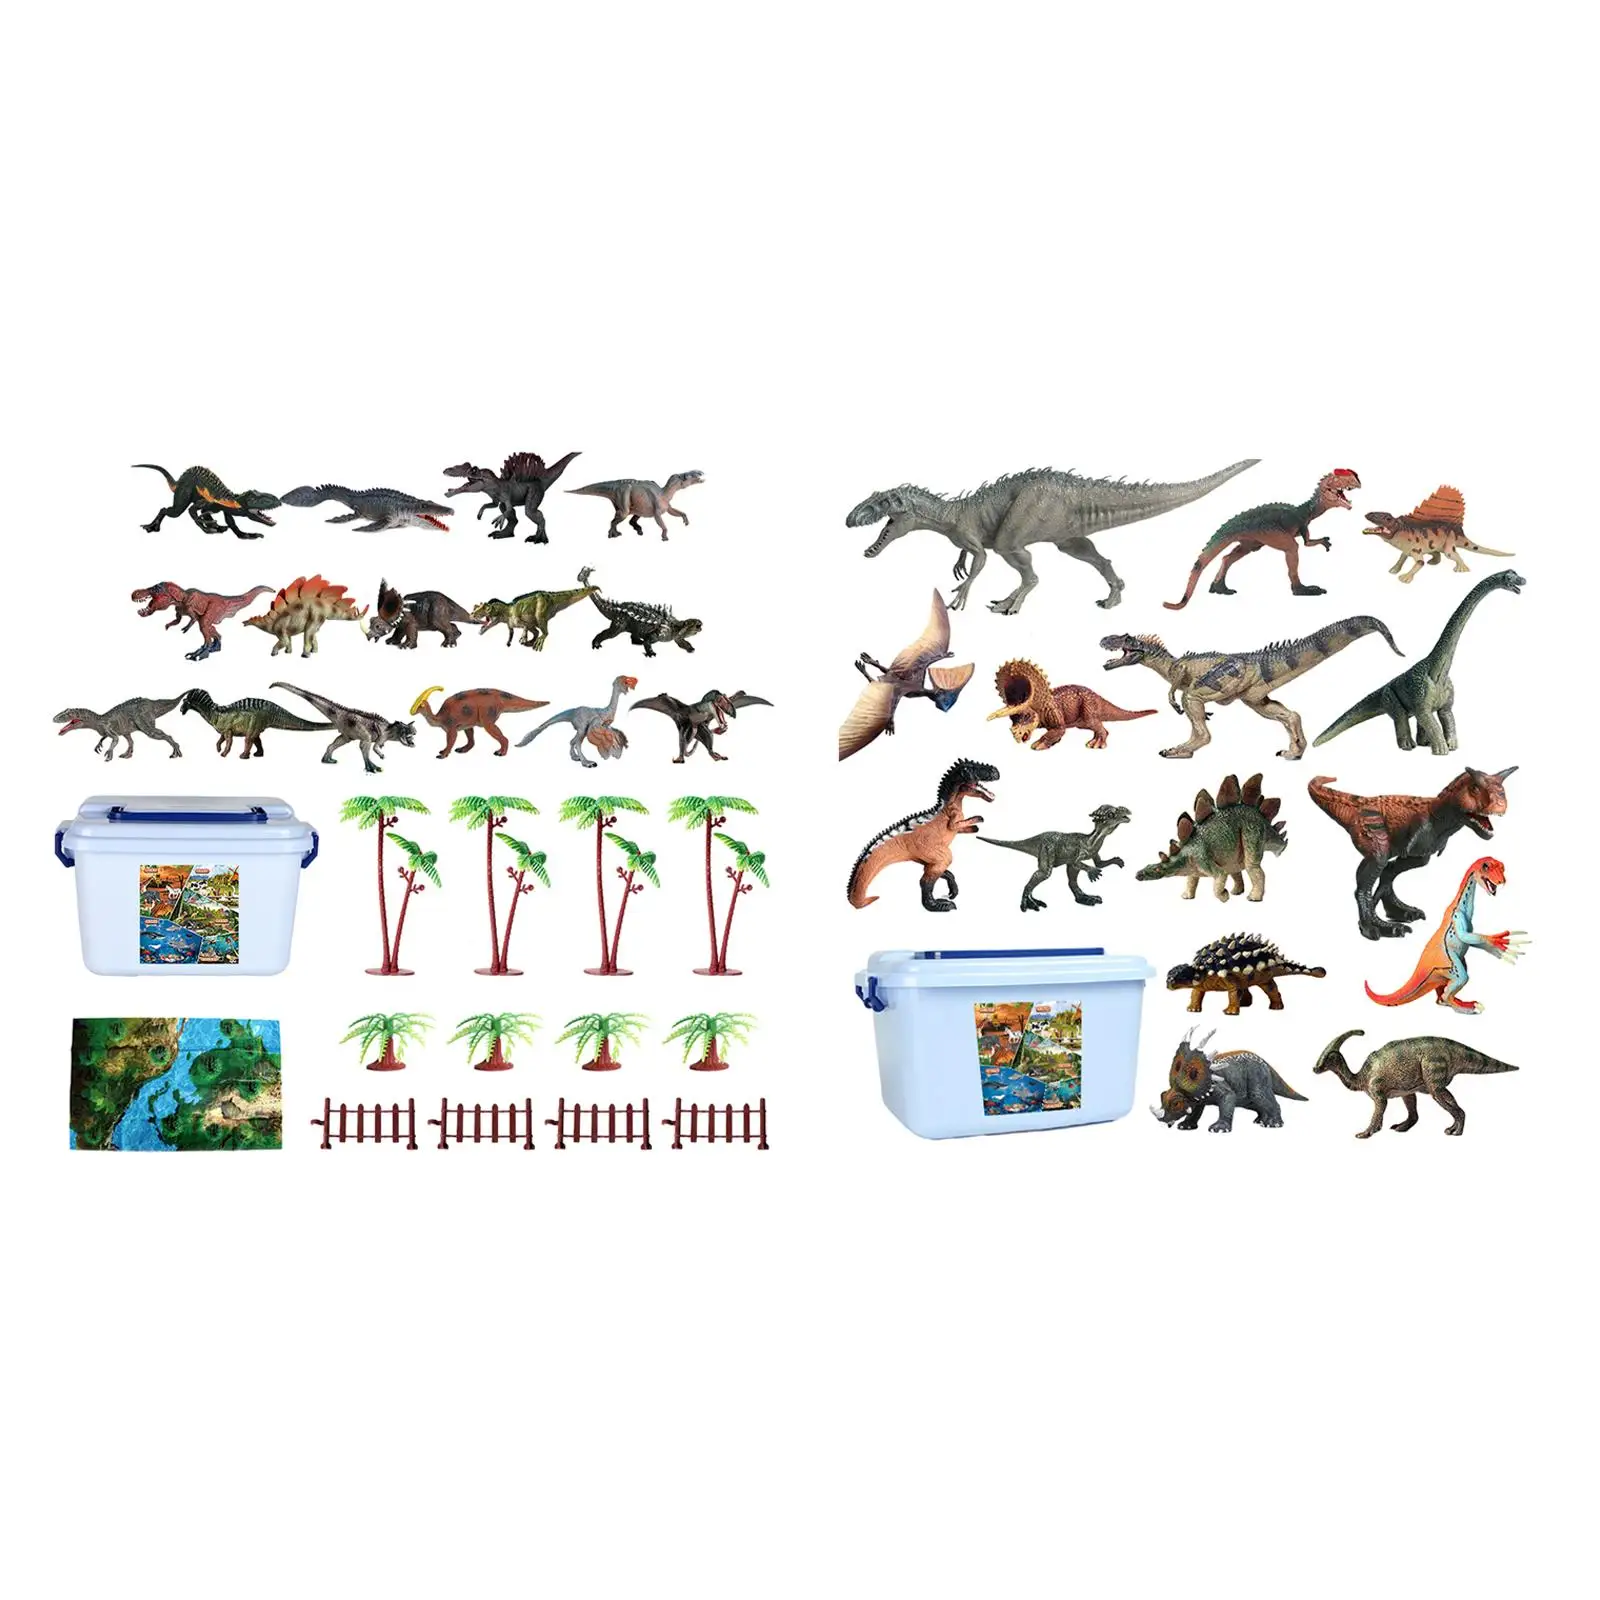 15x Kids Dinosaur Toys Pretend Dinosaur Figures Playset for Birthday Holiday